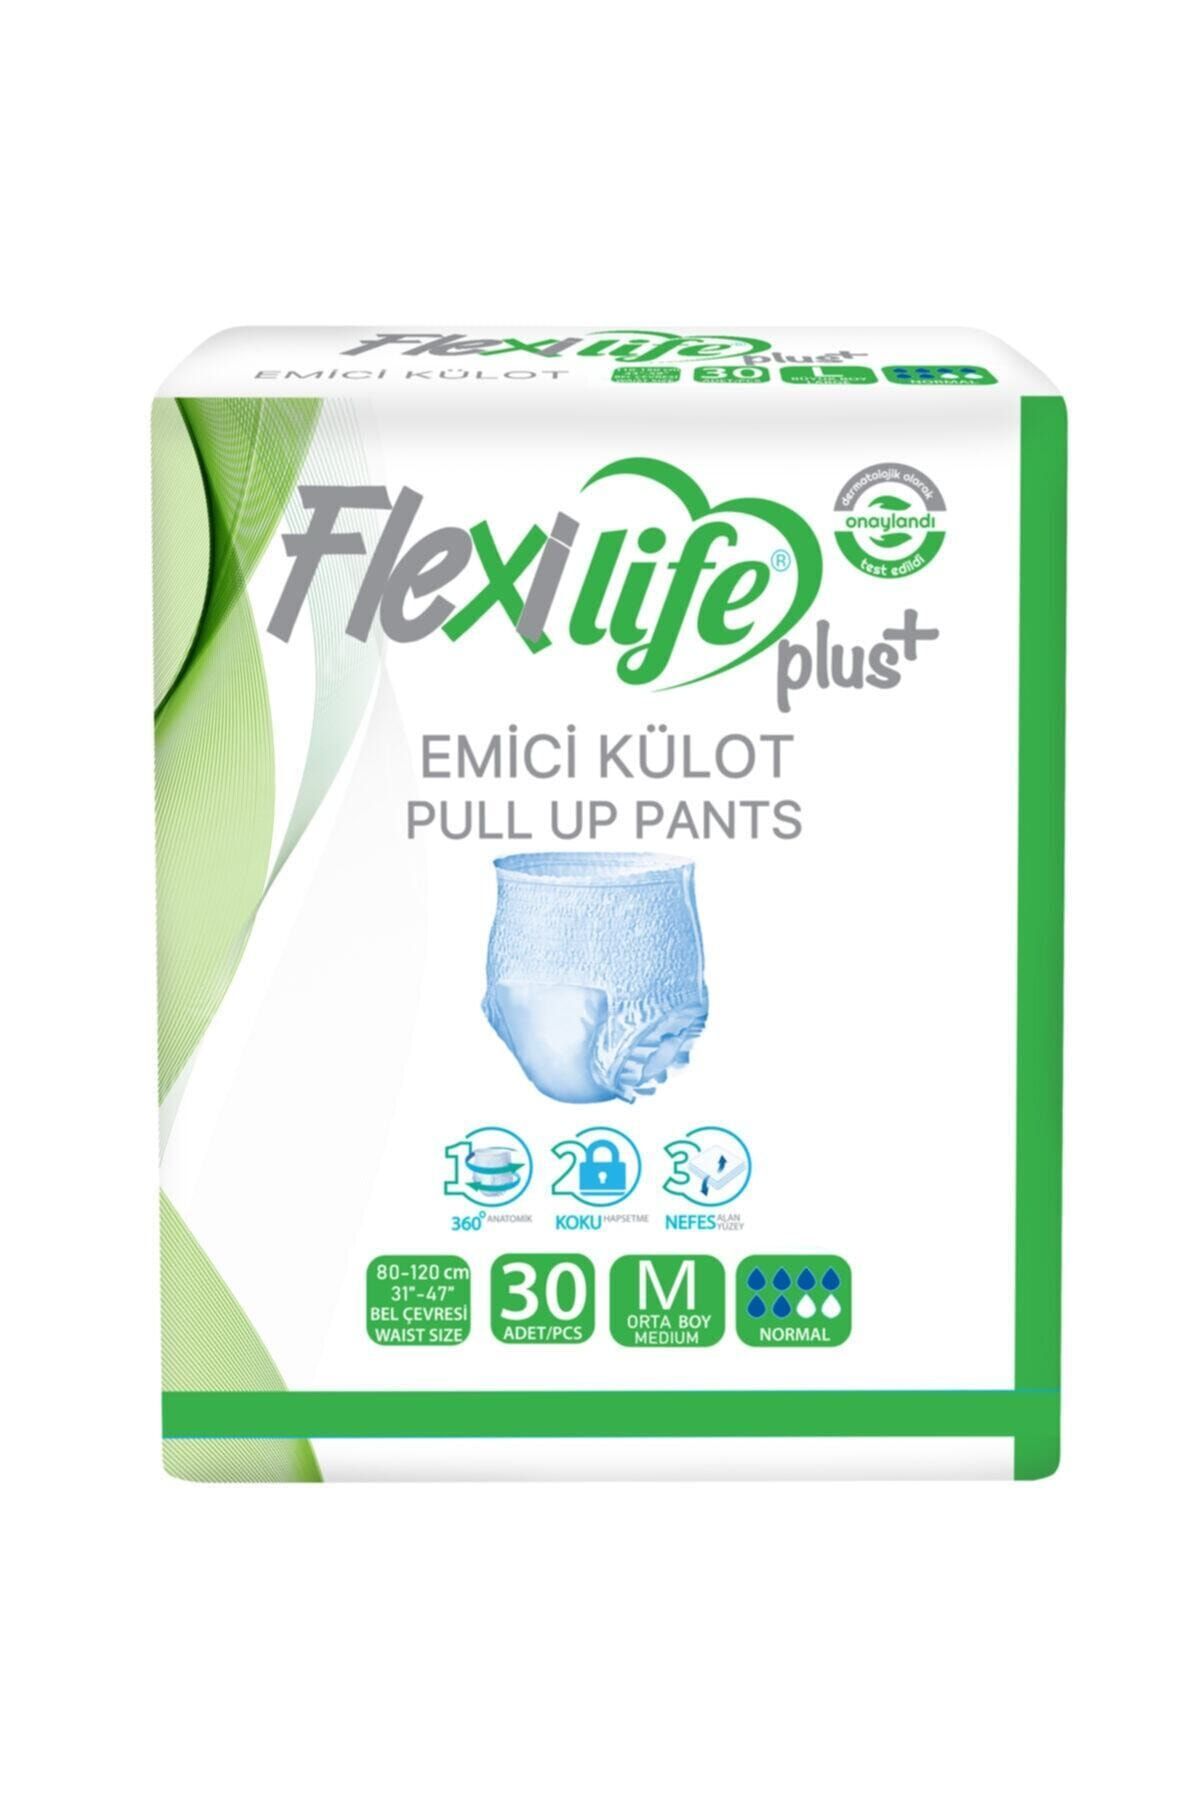 Flexi Life Flexilife Plus Ped Emici Külot Yetişkin Hasta Bezi Medium Boy 30 Lu 3 Paket